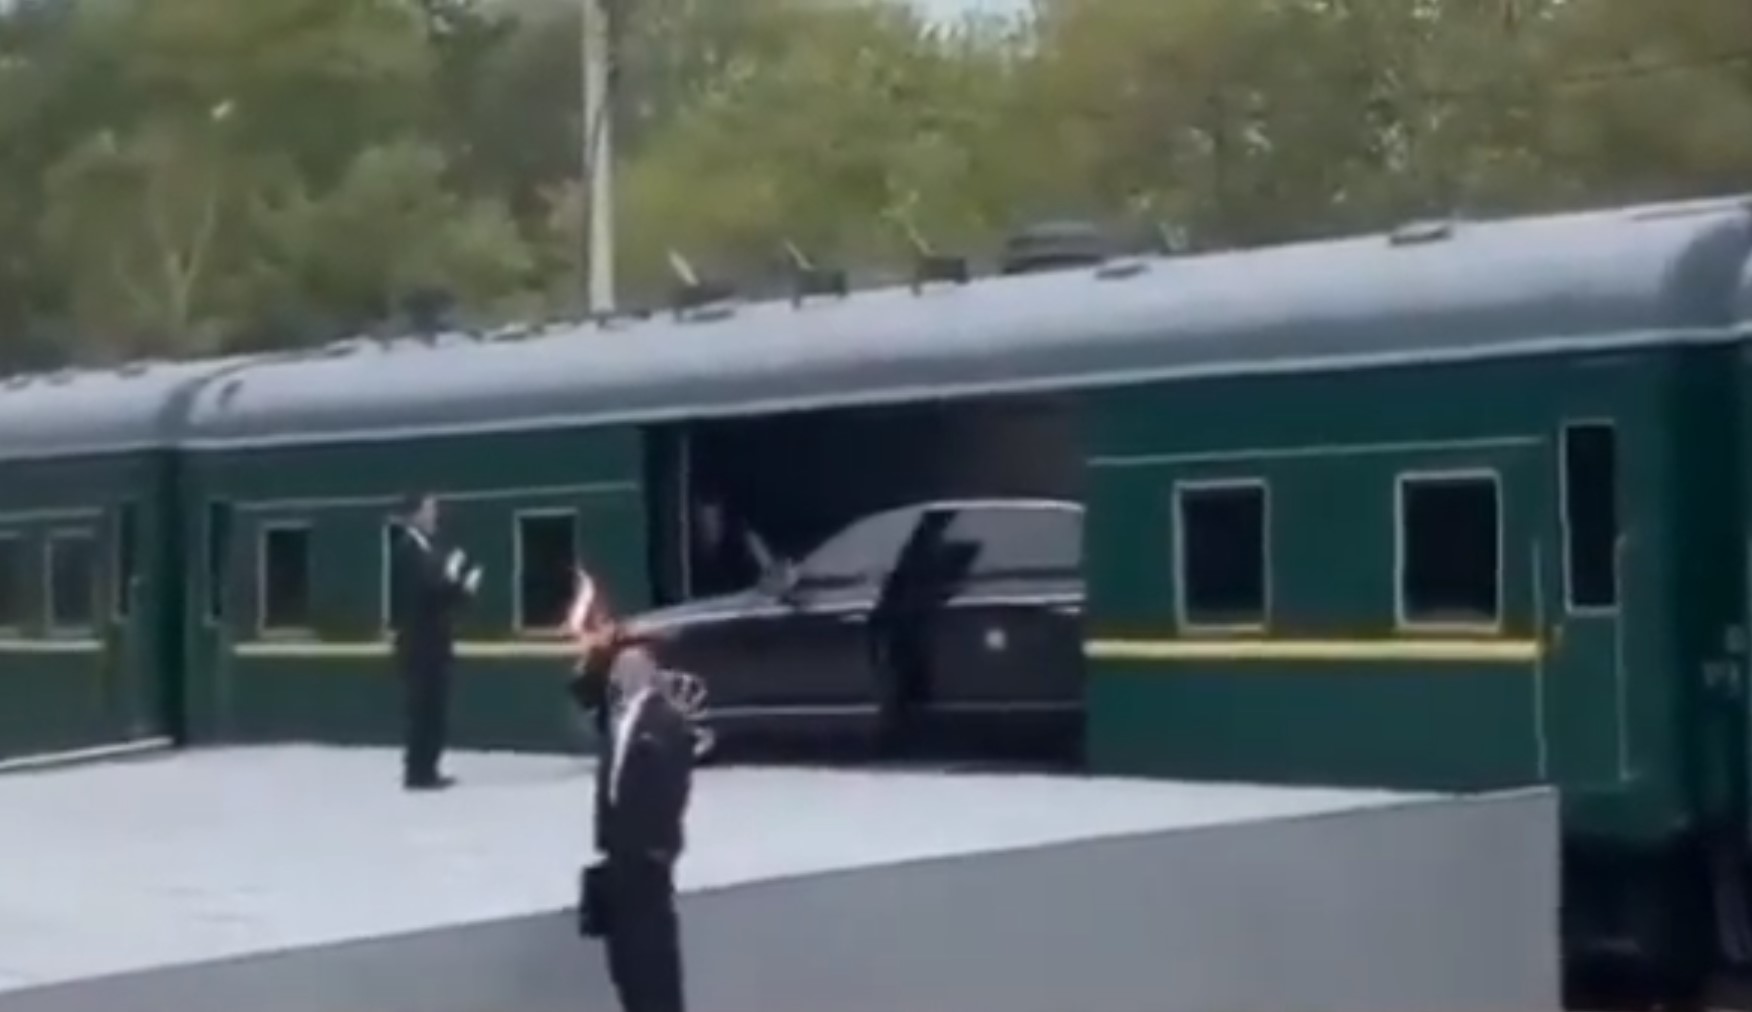 Limousine Maybach de Kim Jong Un dá trabalho para entrar no trem